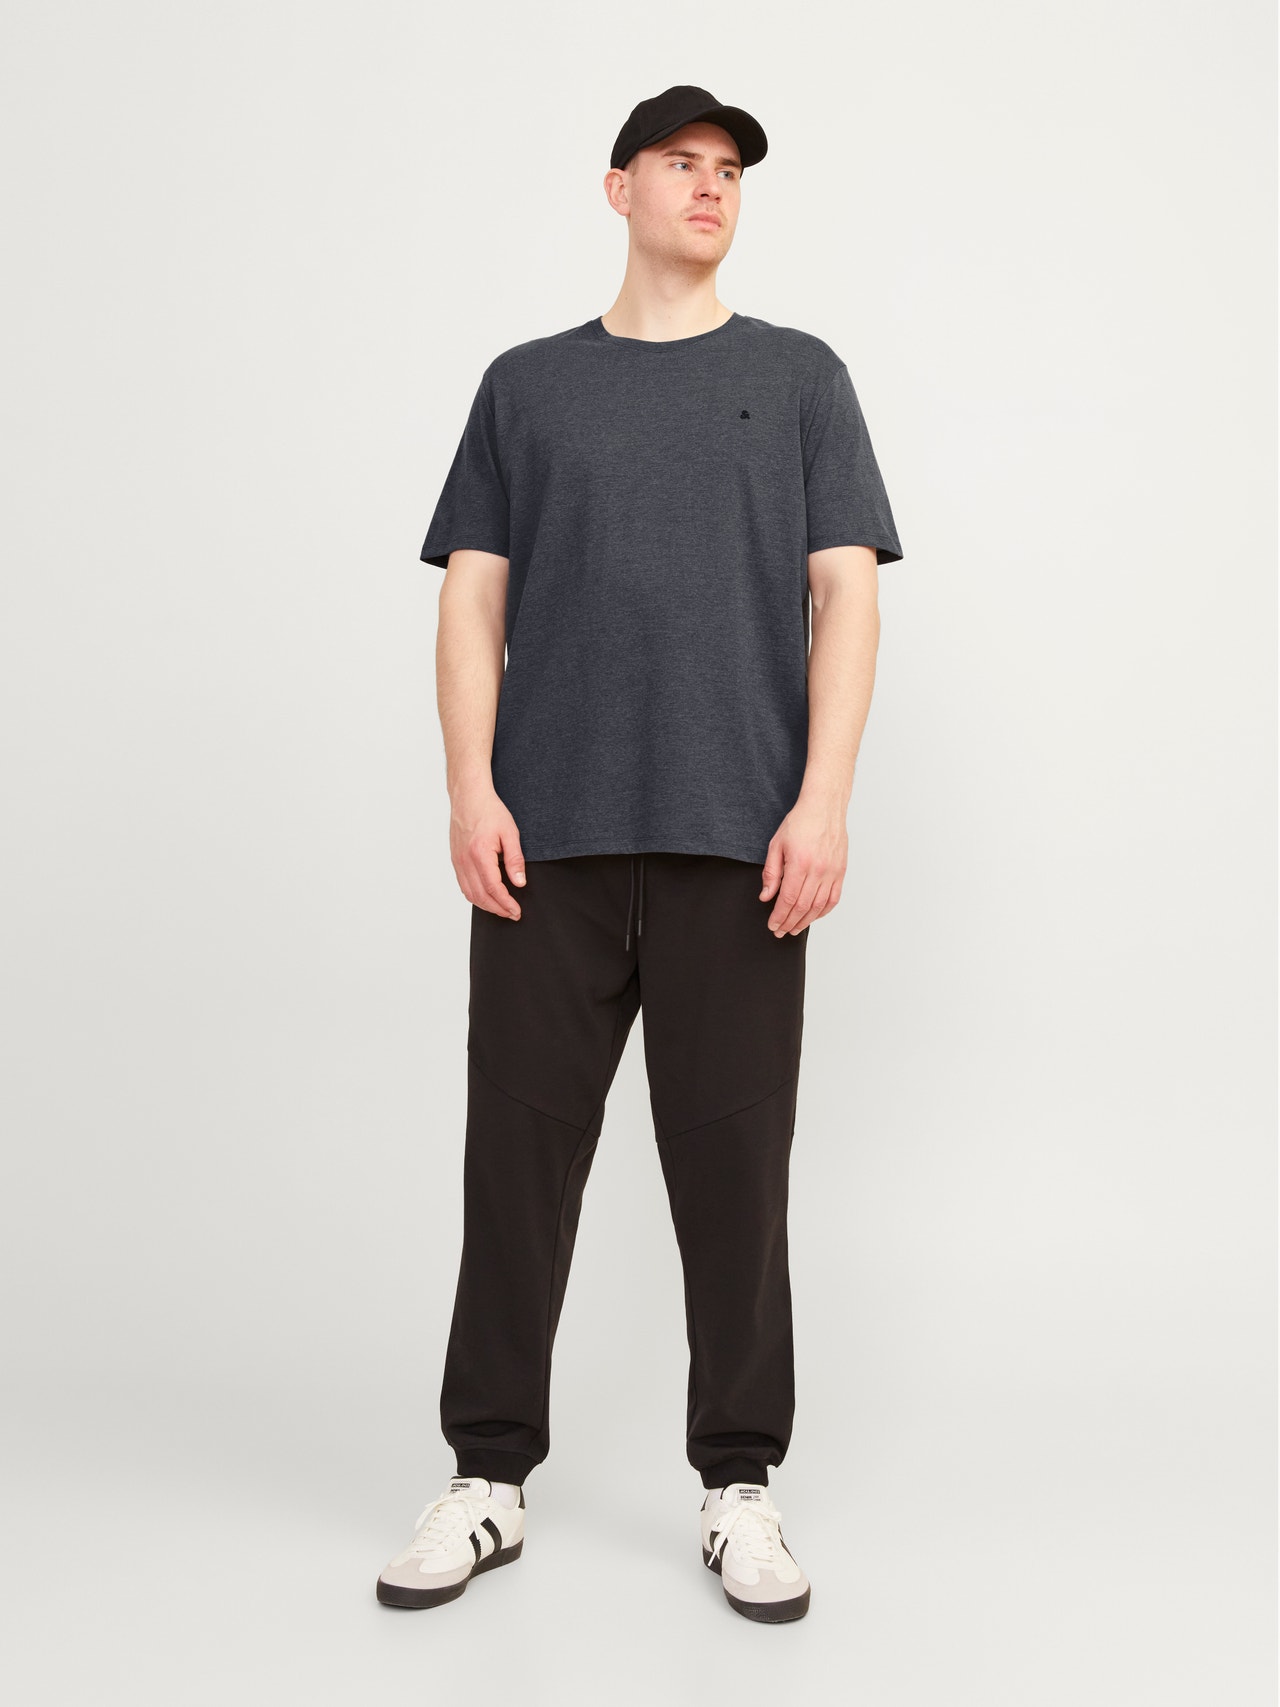 Jack & Jones Plus Size Plain T-shirt -Dark Grey Melange - 12253778